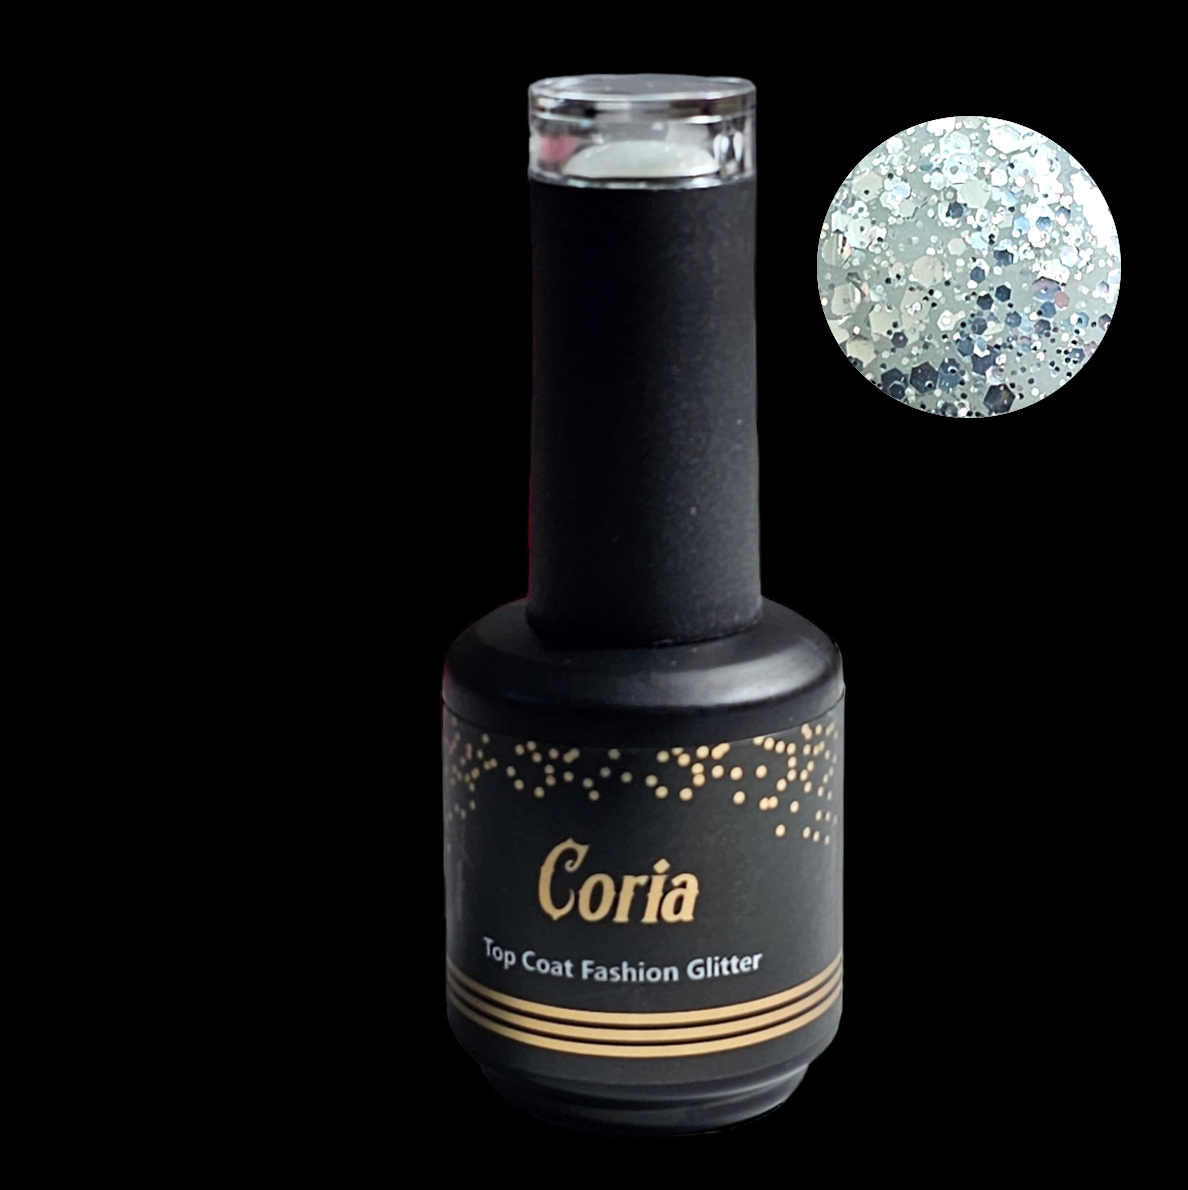 Top Coat Fashion Glitter Coria 15 ml 112